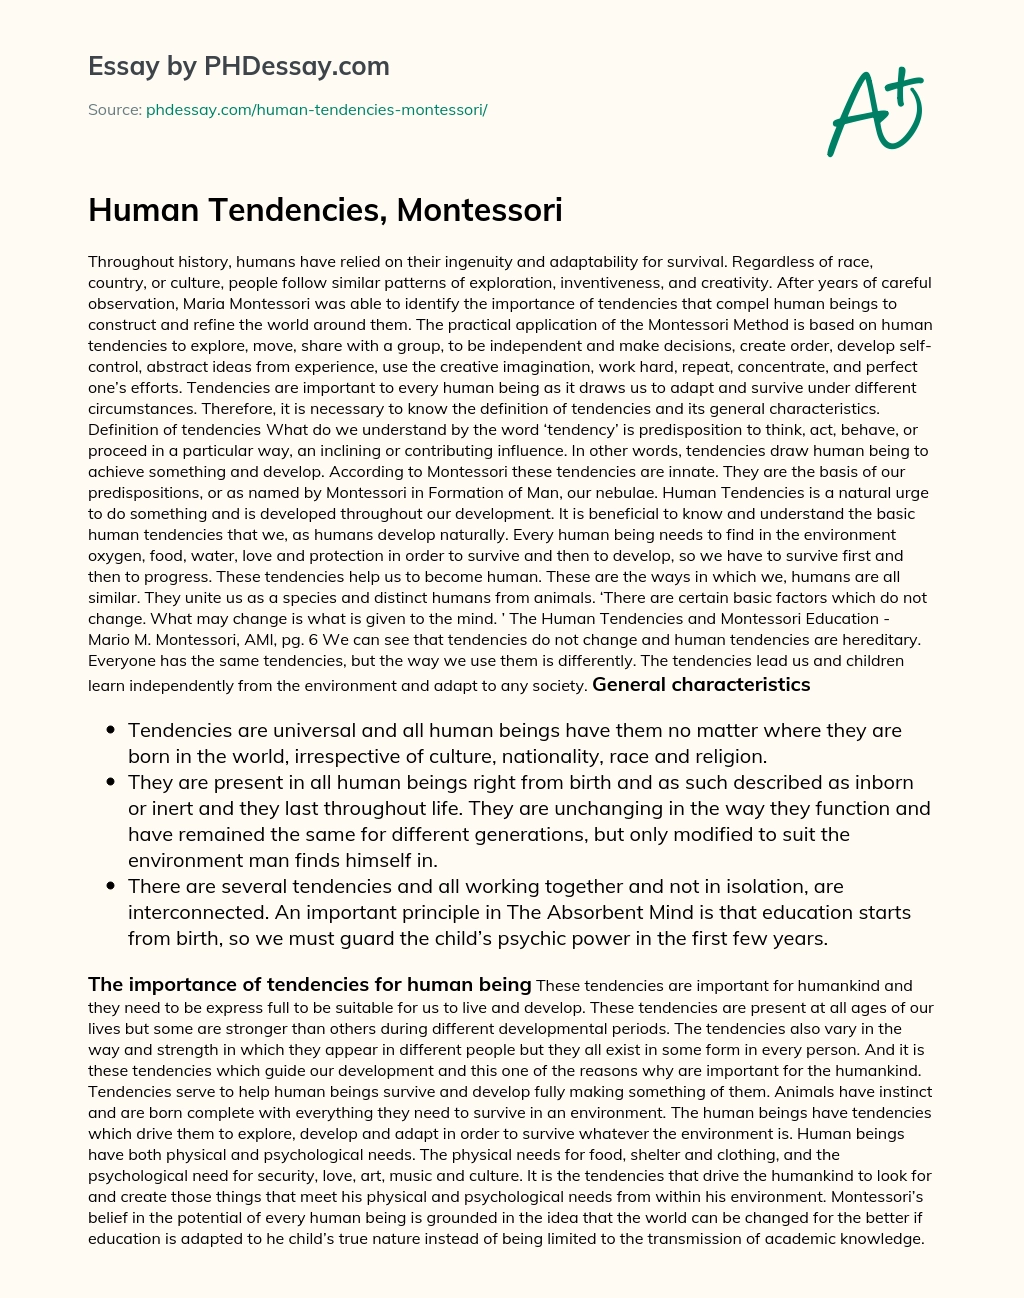 Human Tendencies, Montessori essay